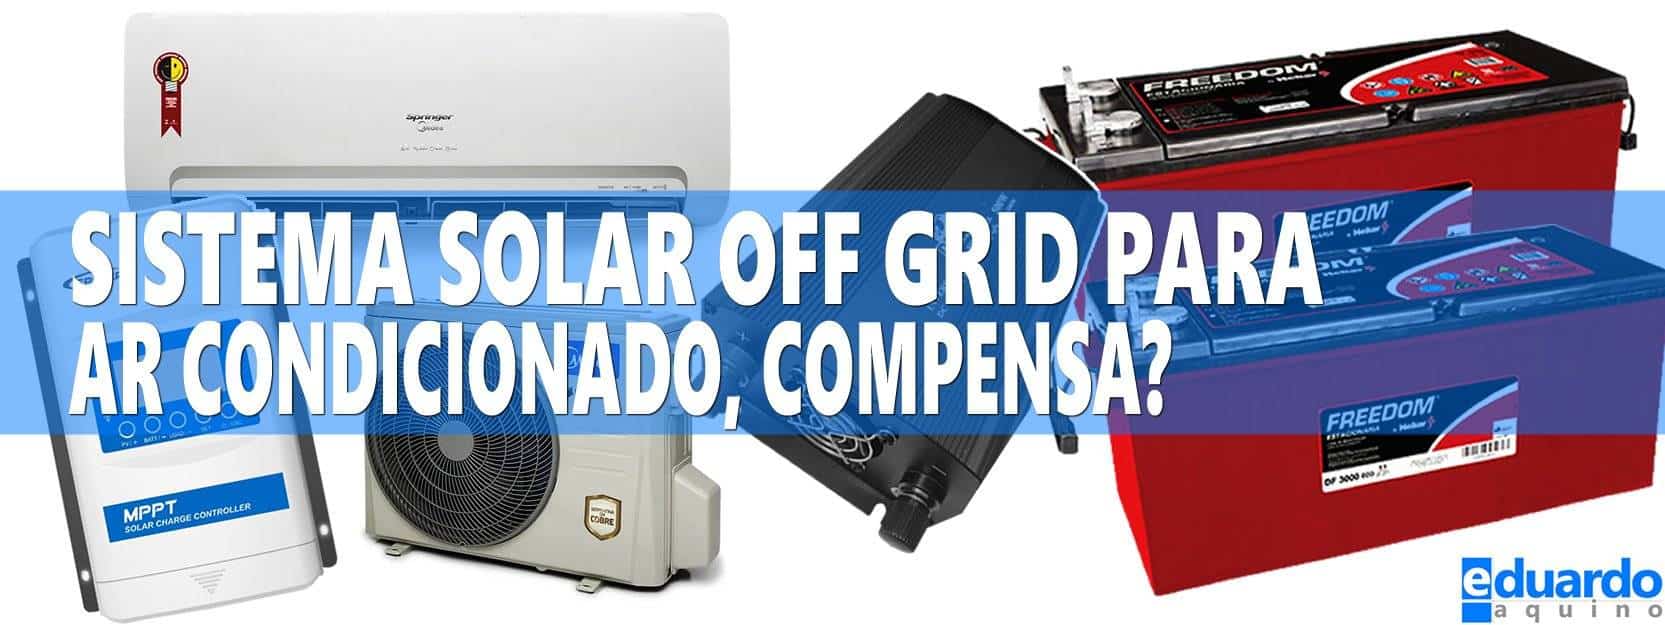 Quanto Custa Sistema Solar Off Grid para AR Condicionado?